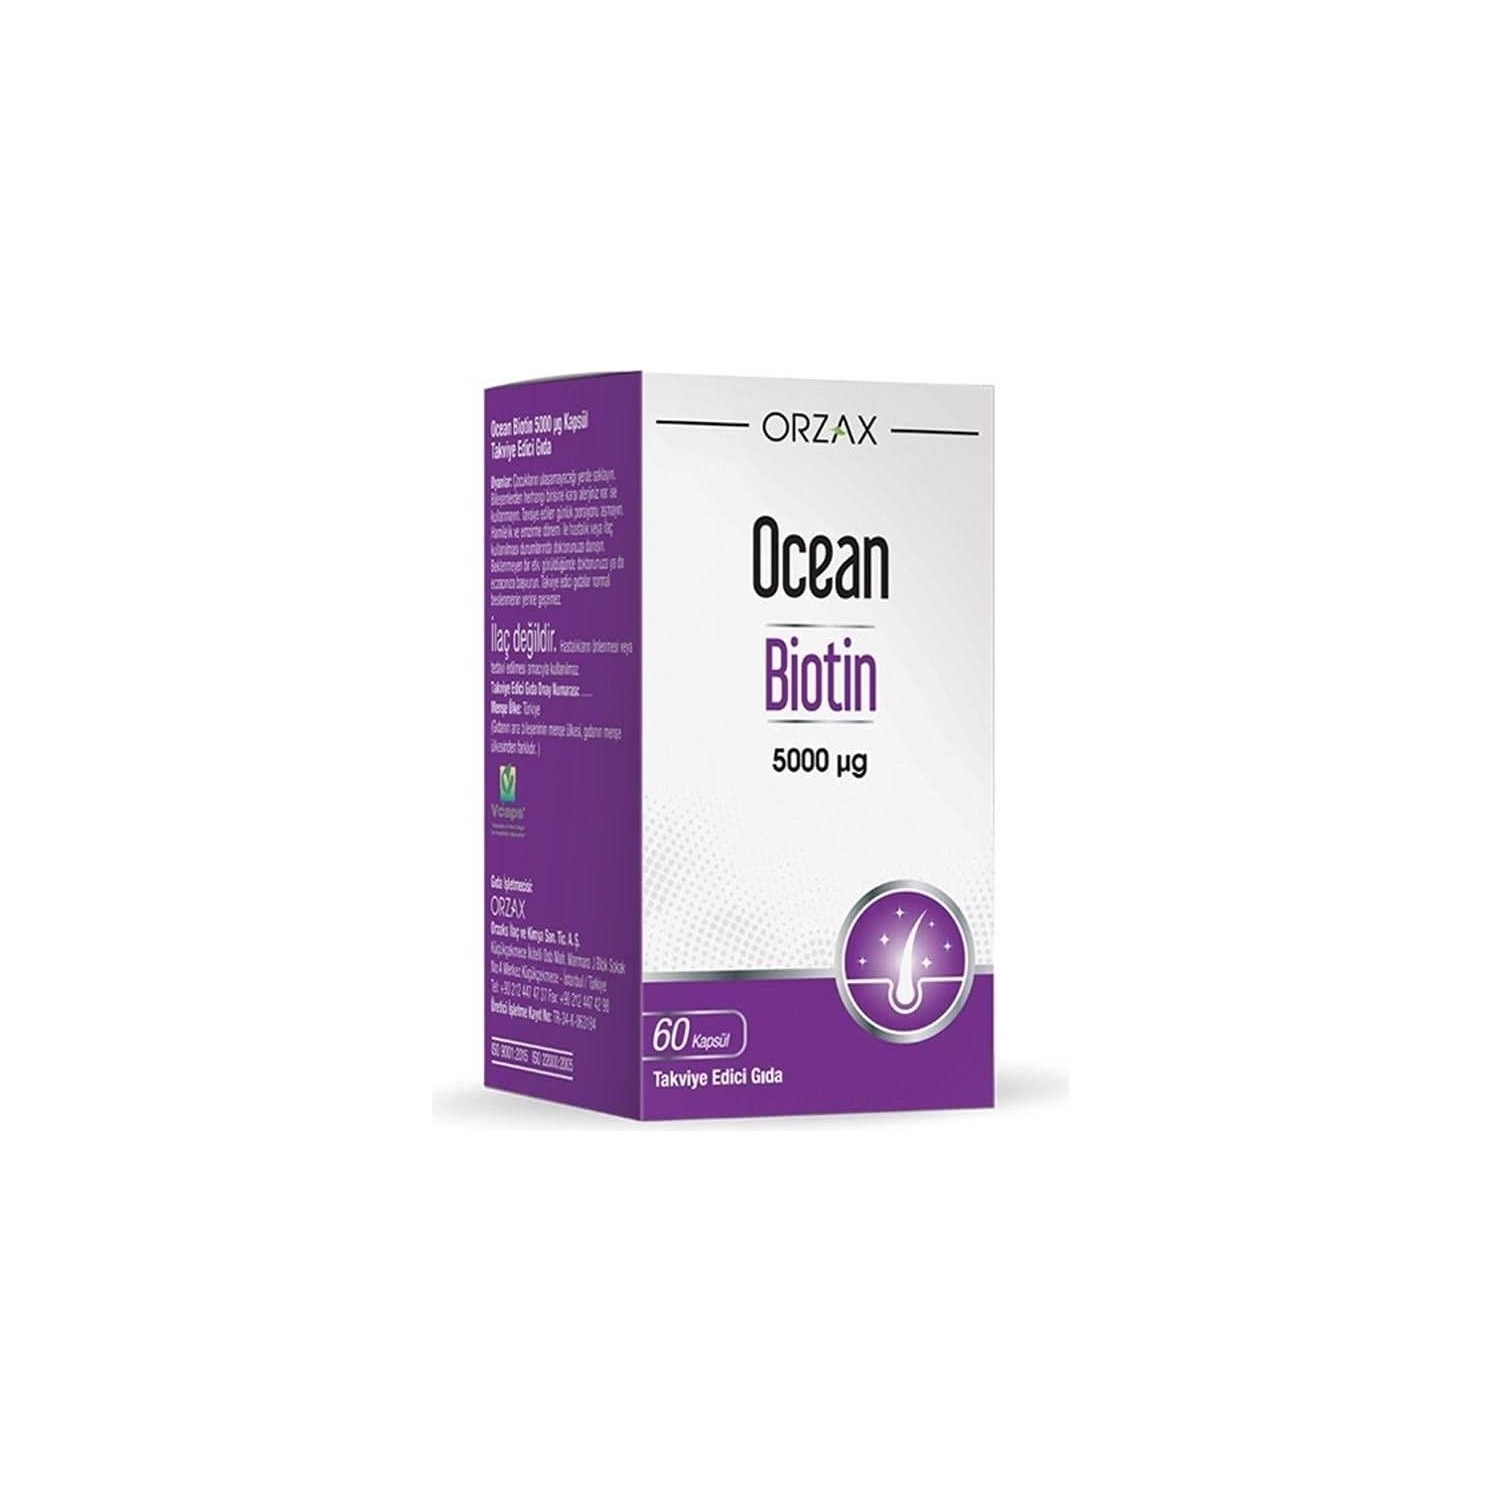 Пищевая добавка Ocean Biotin 5000MCG, 60 капсул пищевая добавка ocean biotin 60 капсул 5000 мкг